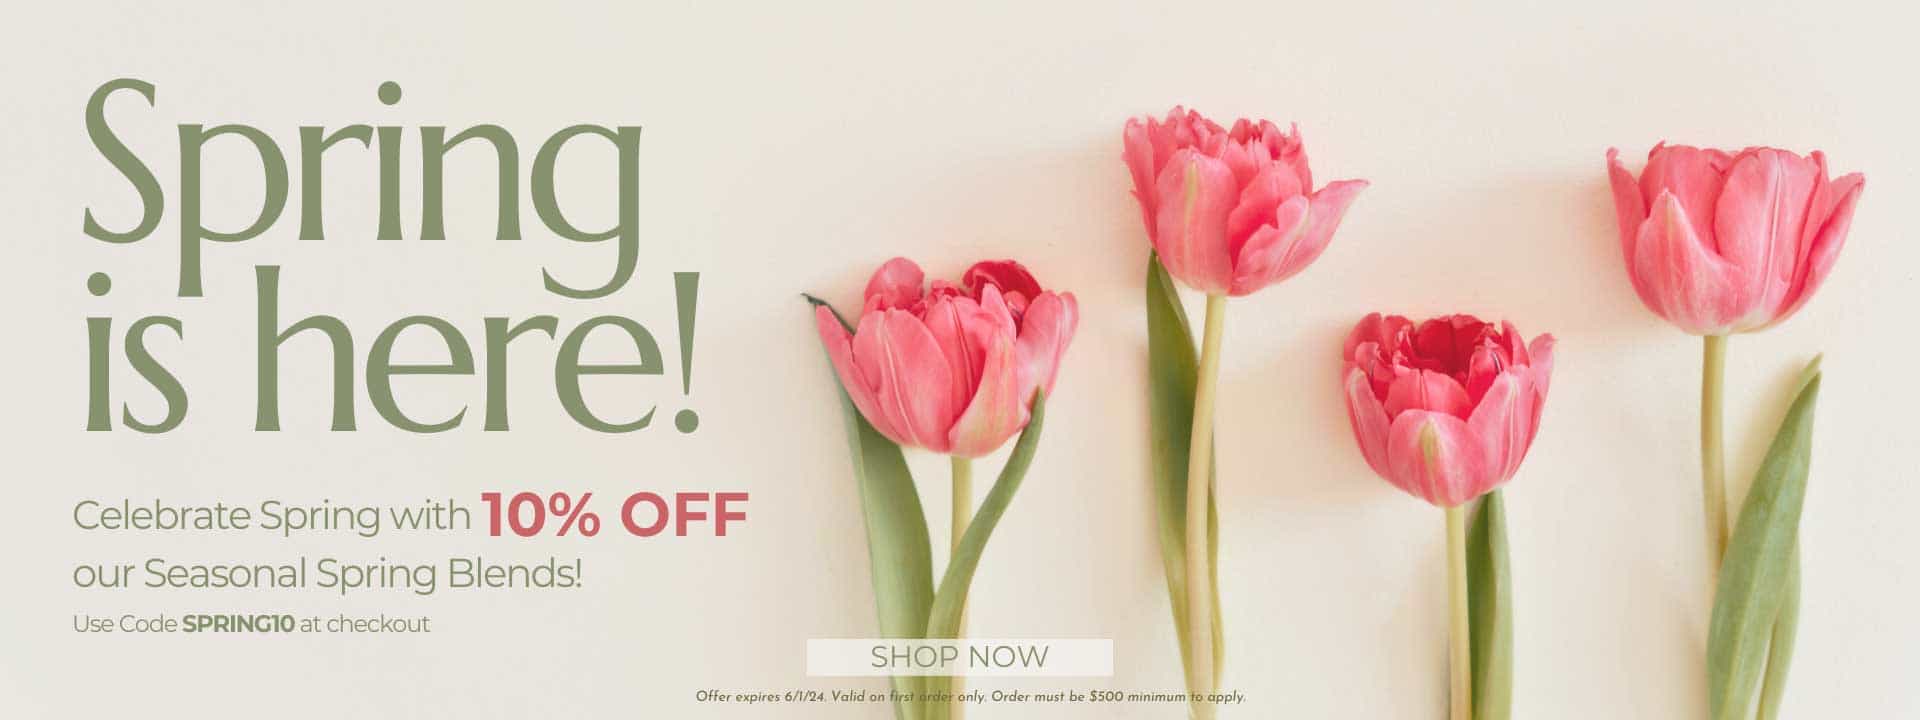 Spring Blends, pink tulips, save 10%